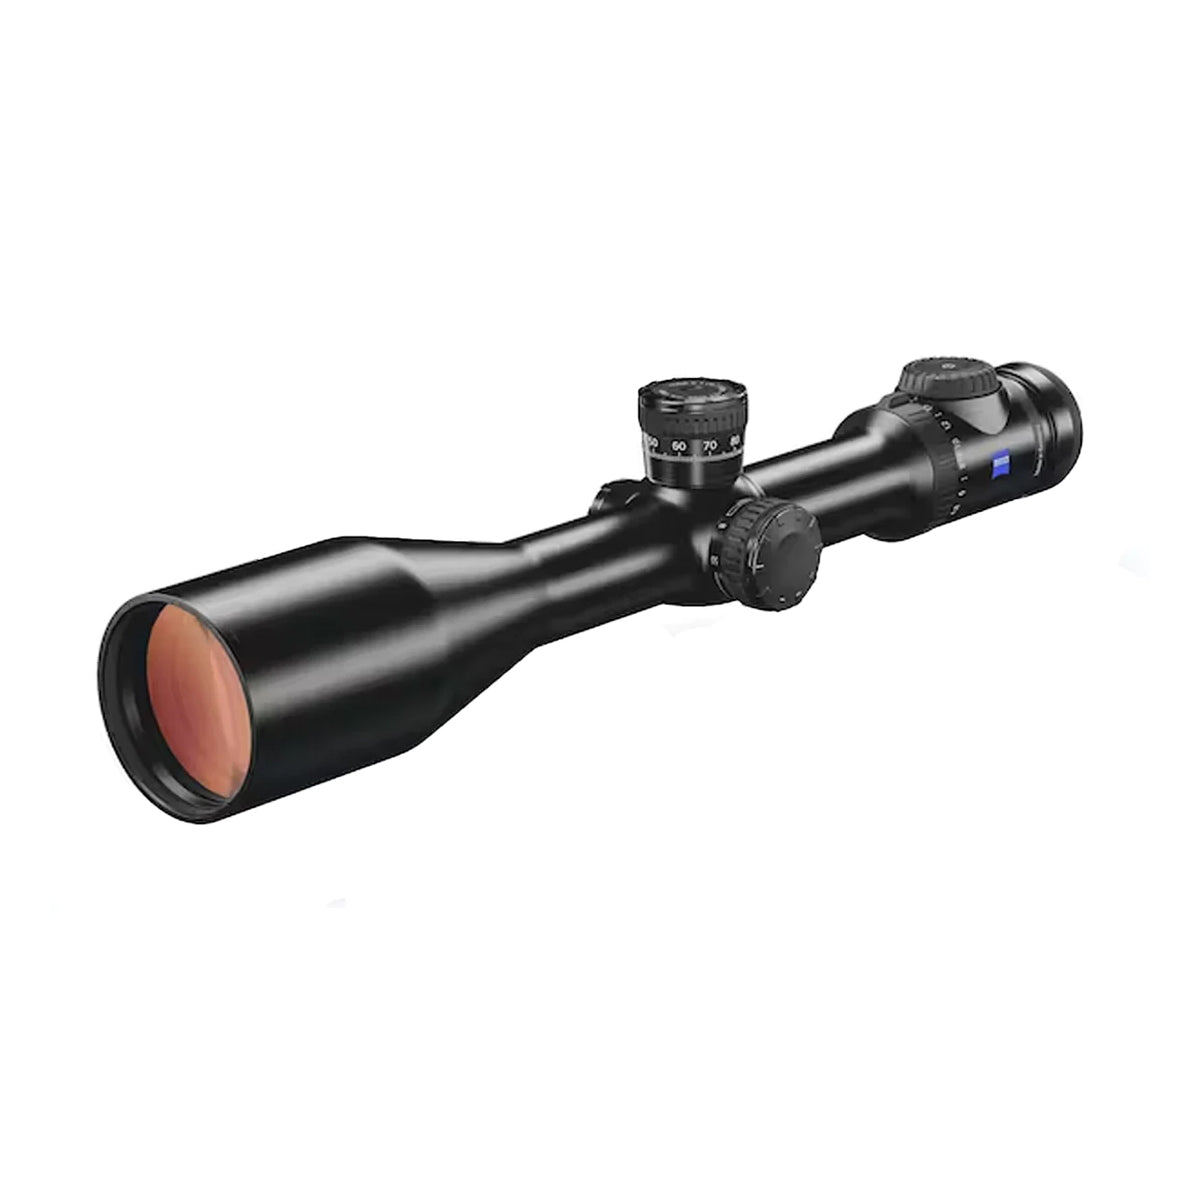 Zeiss V8 4.8-35x60 w/ Illuminated Plex Reticle #60 Riflescope